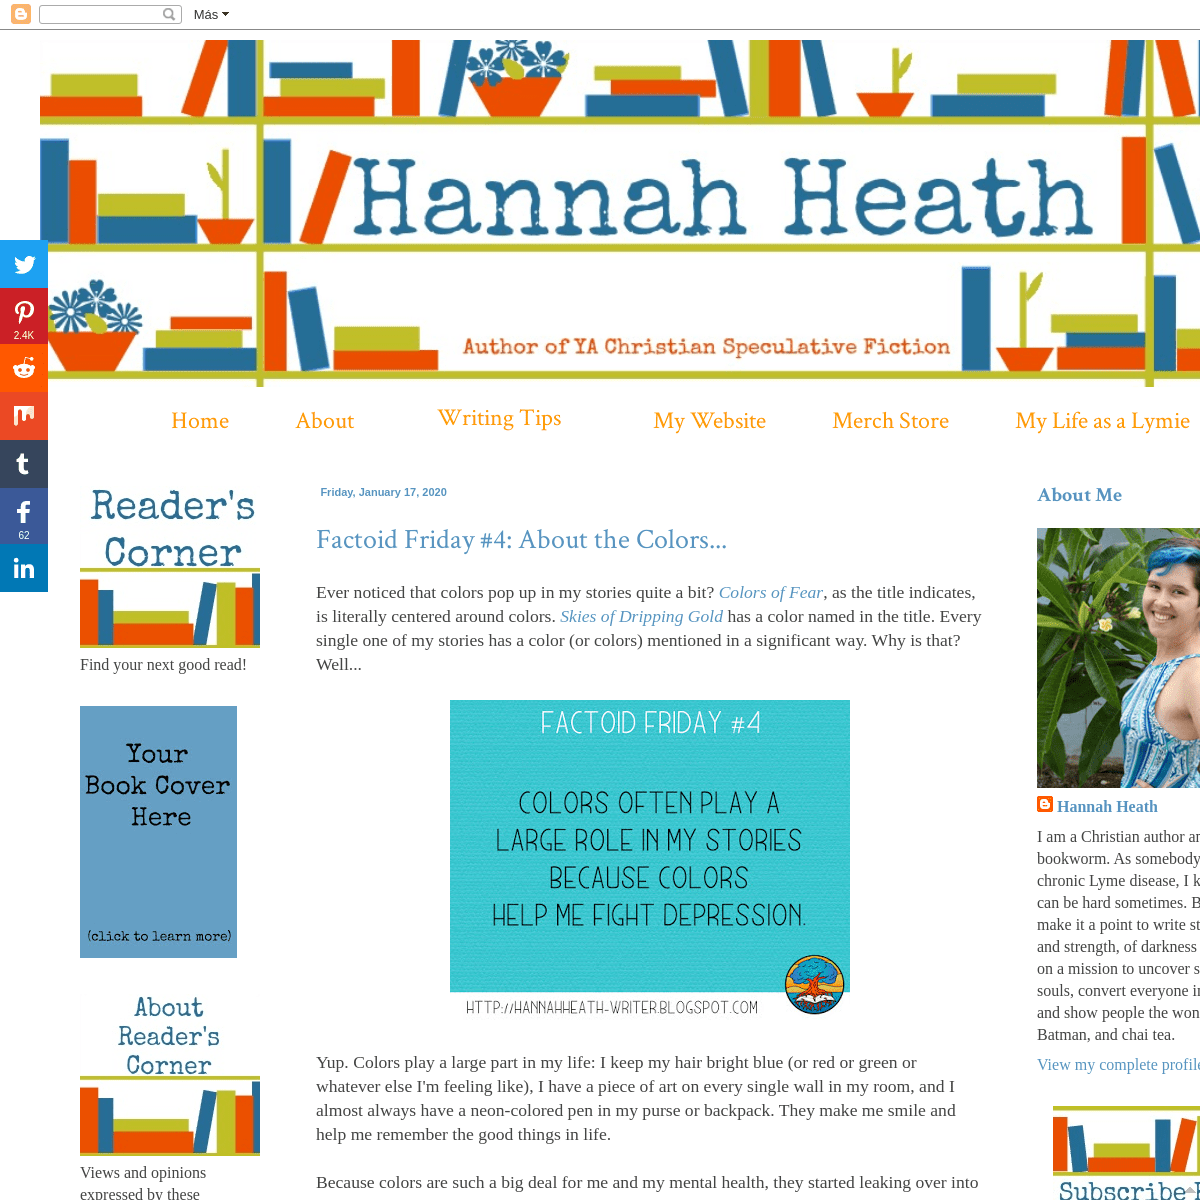 A complete backup of hannahheath-writer.blogspot.com